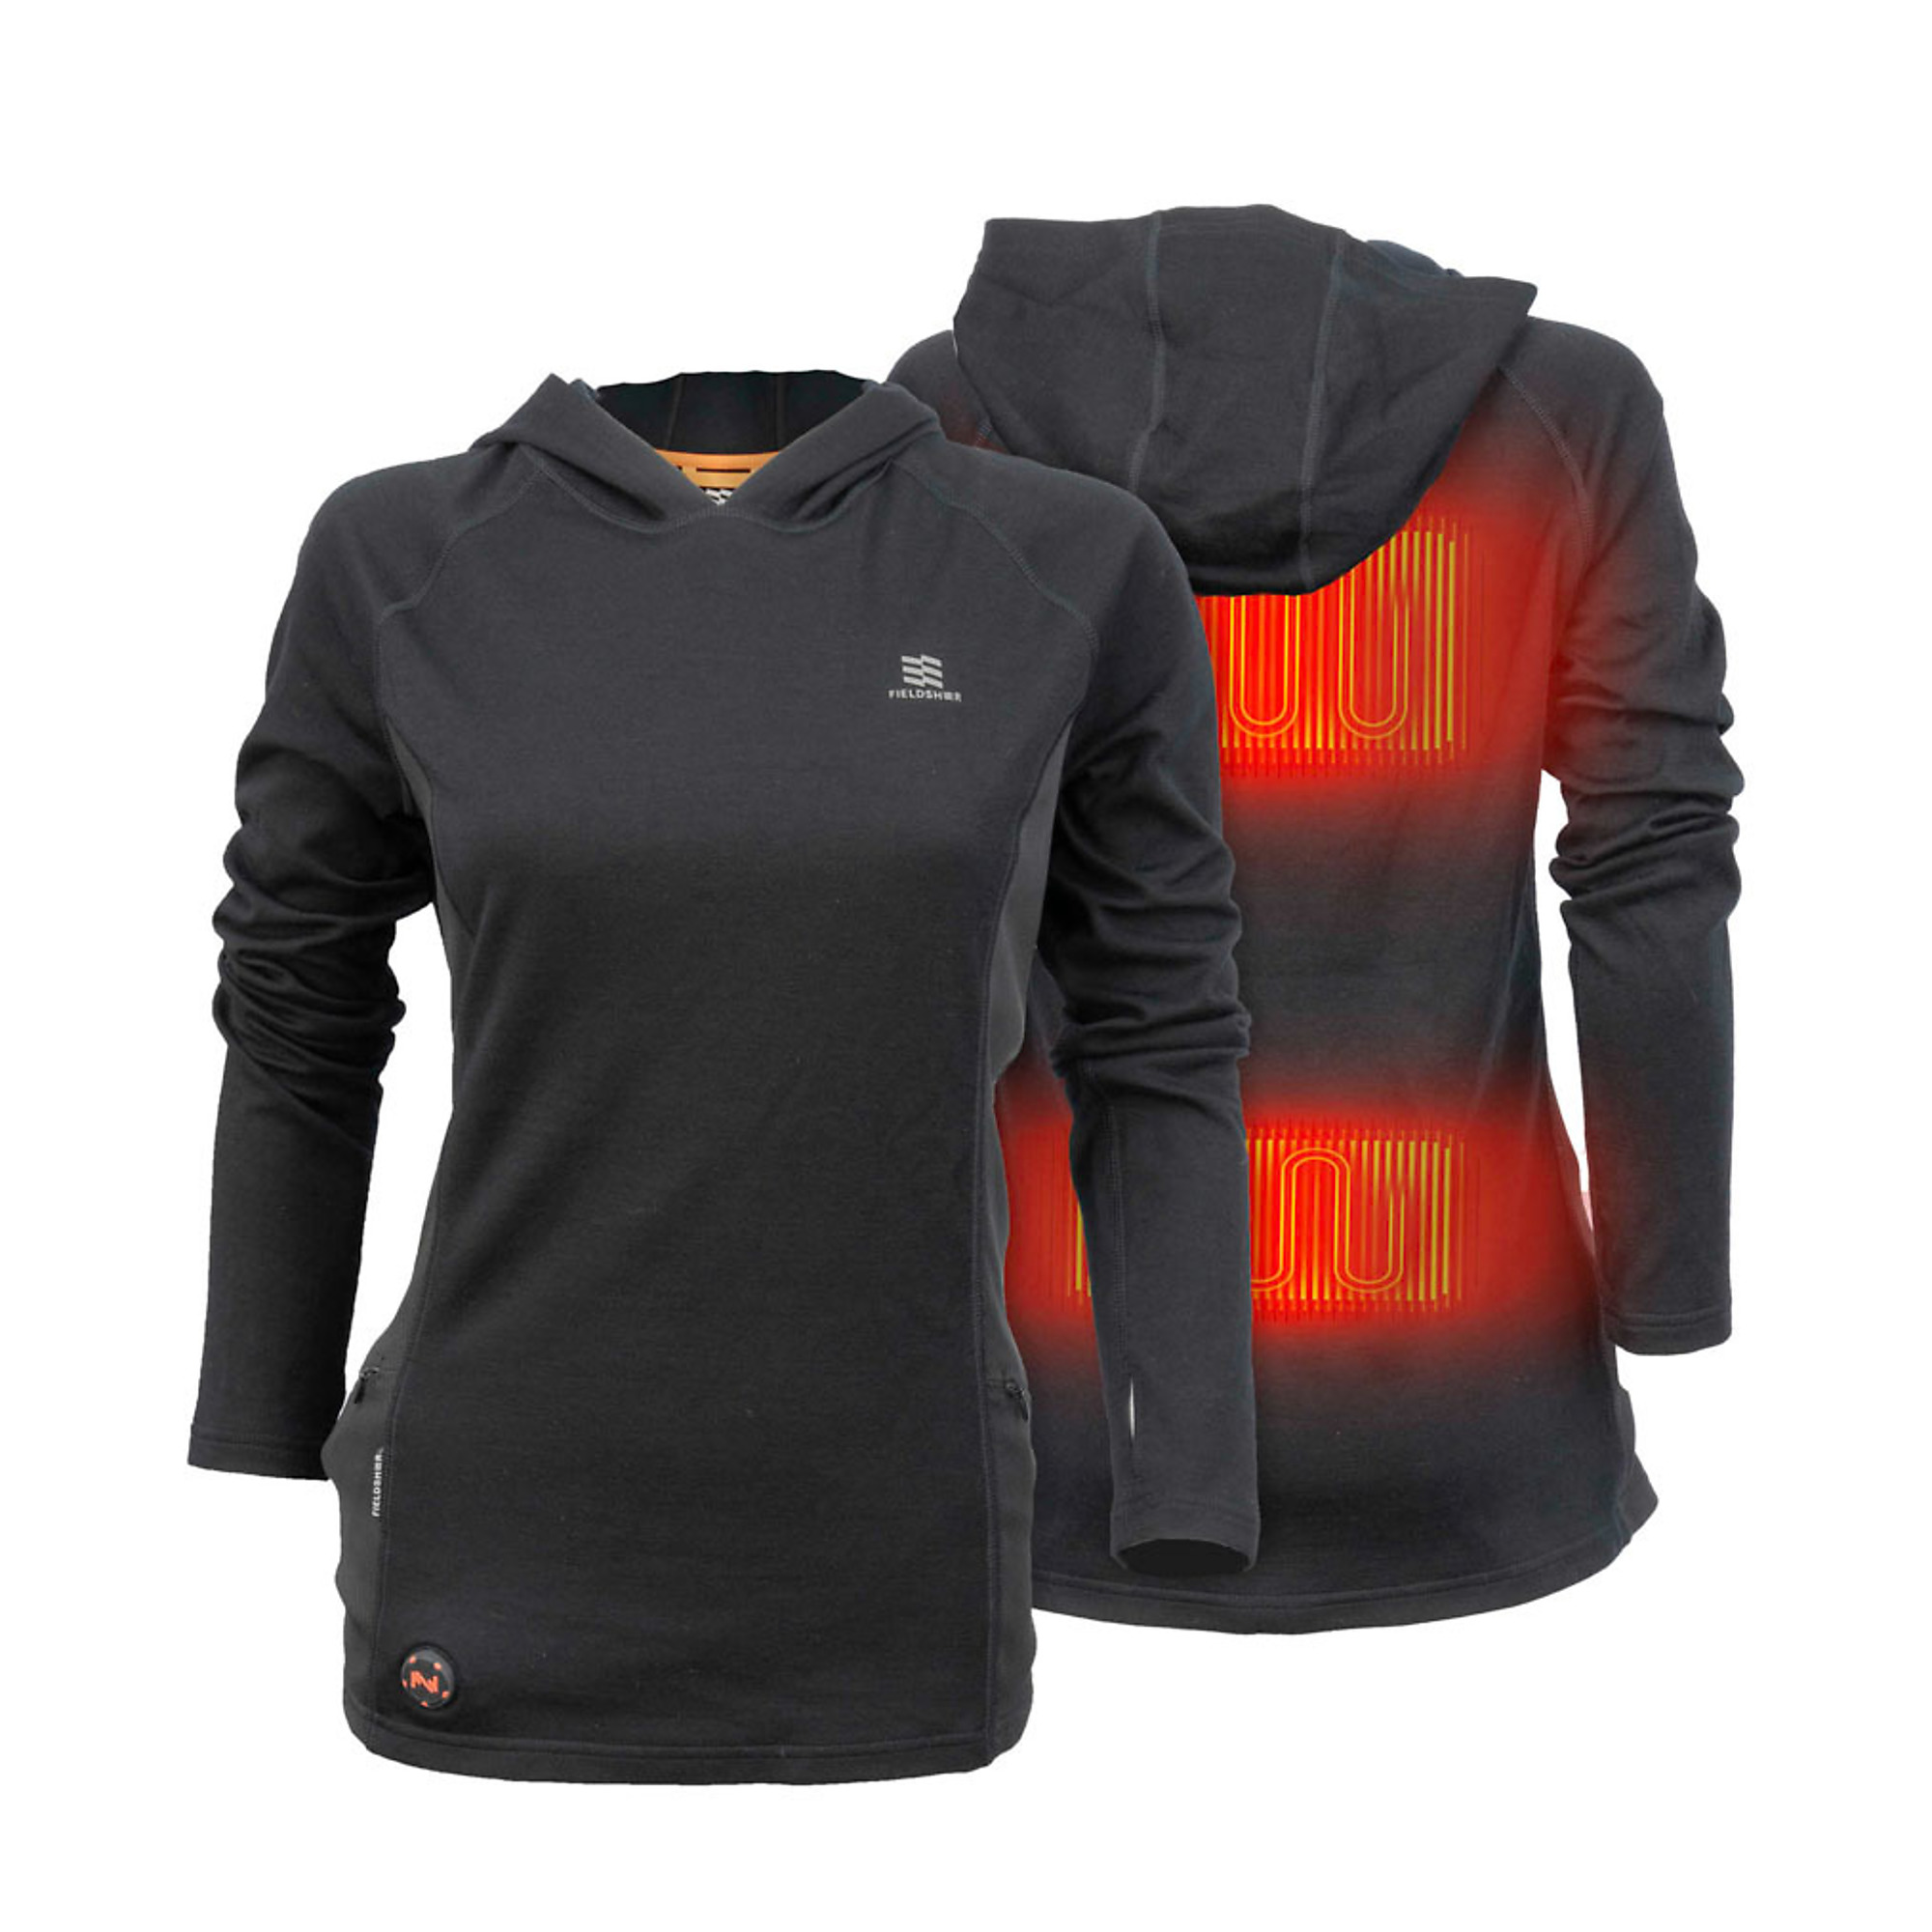 Fieldsheer, Women's Merino Heated Baselayer Shirt, Size XS, Color Black, Model MWWT14010121